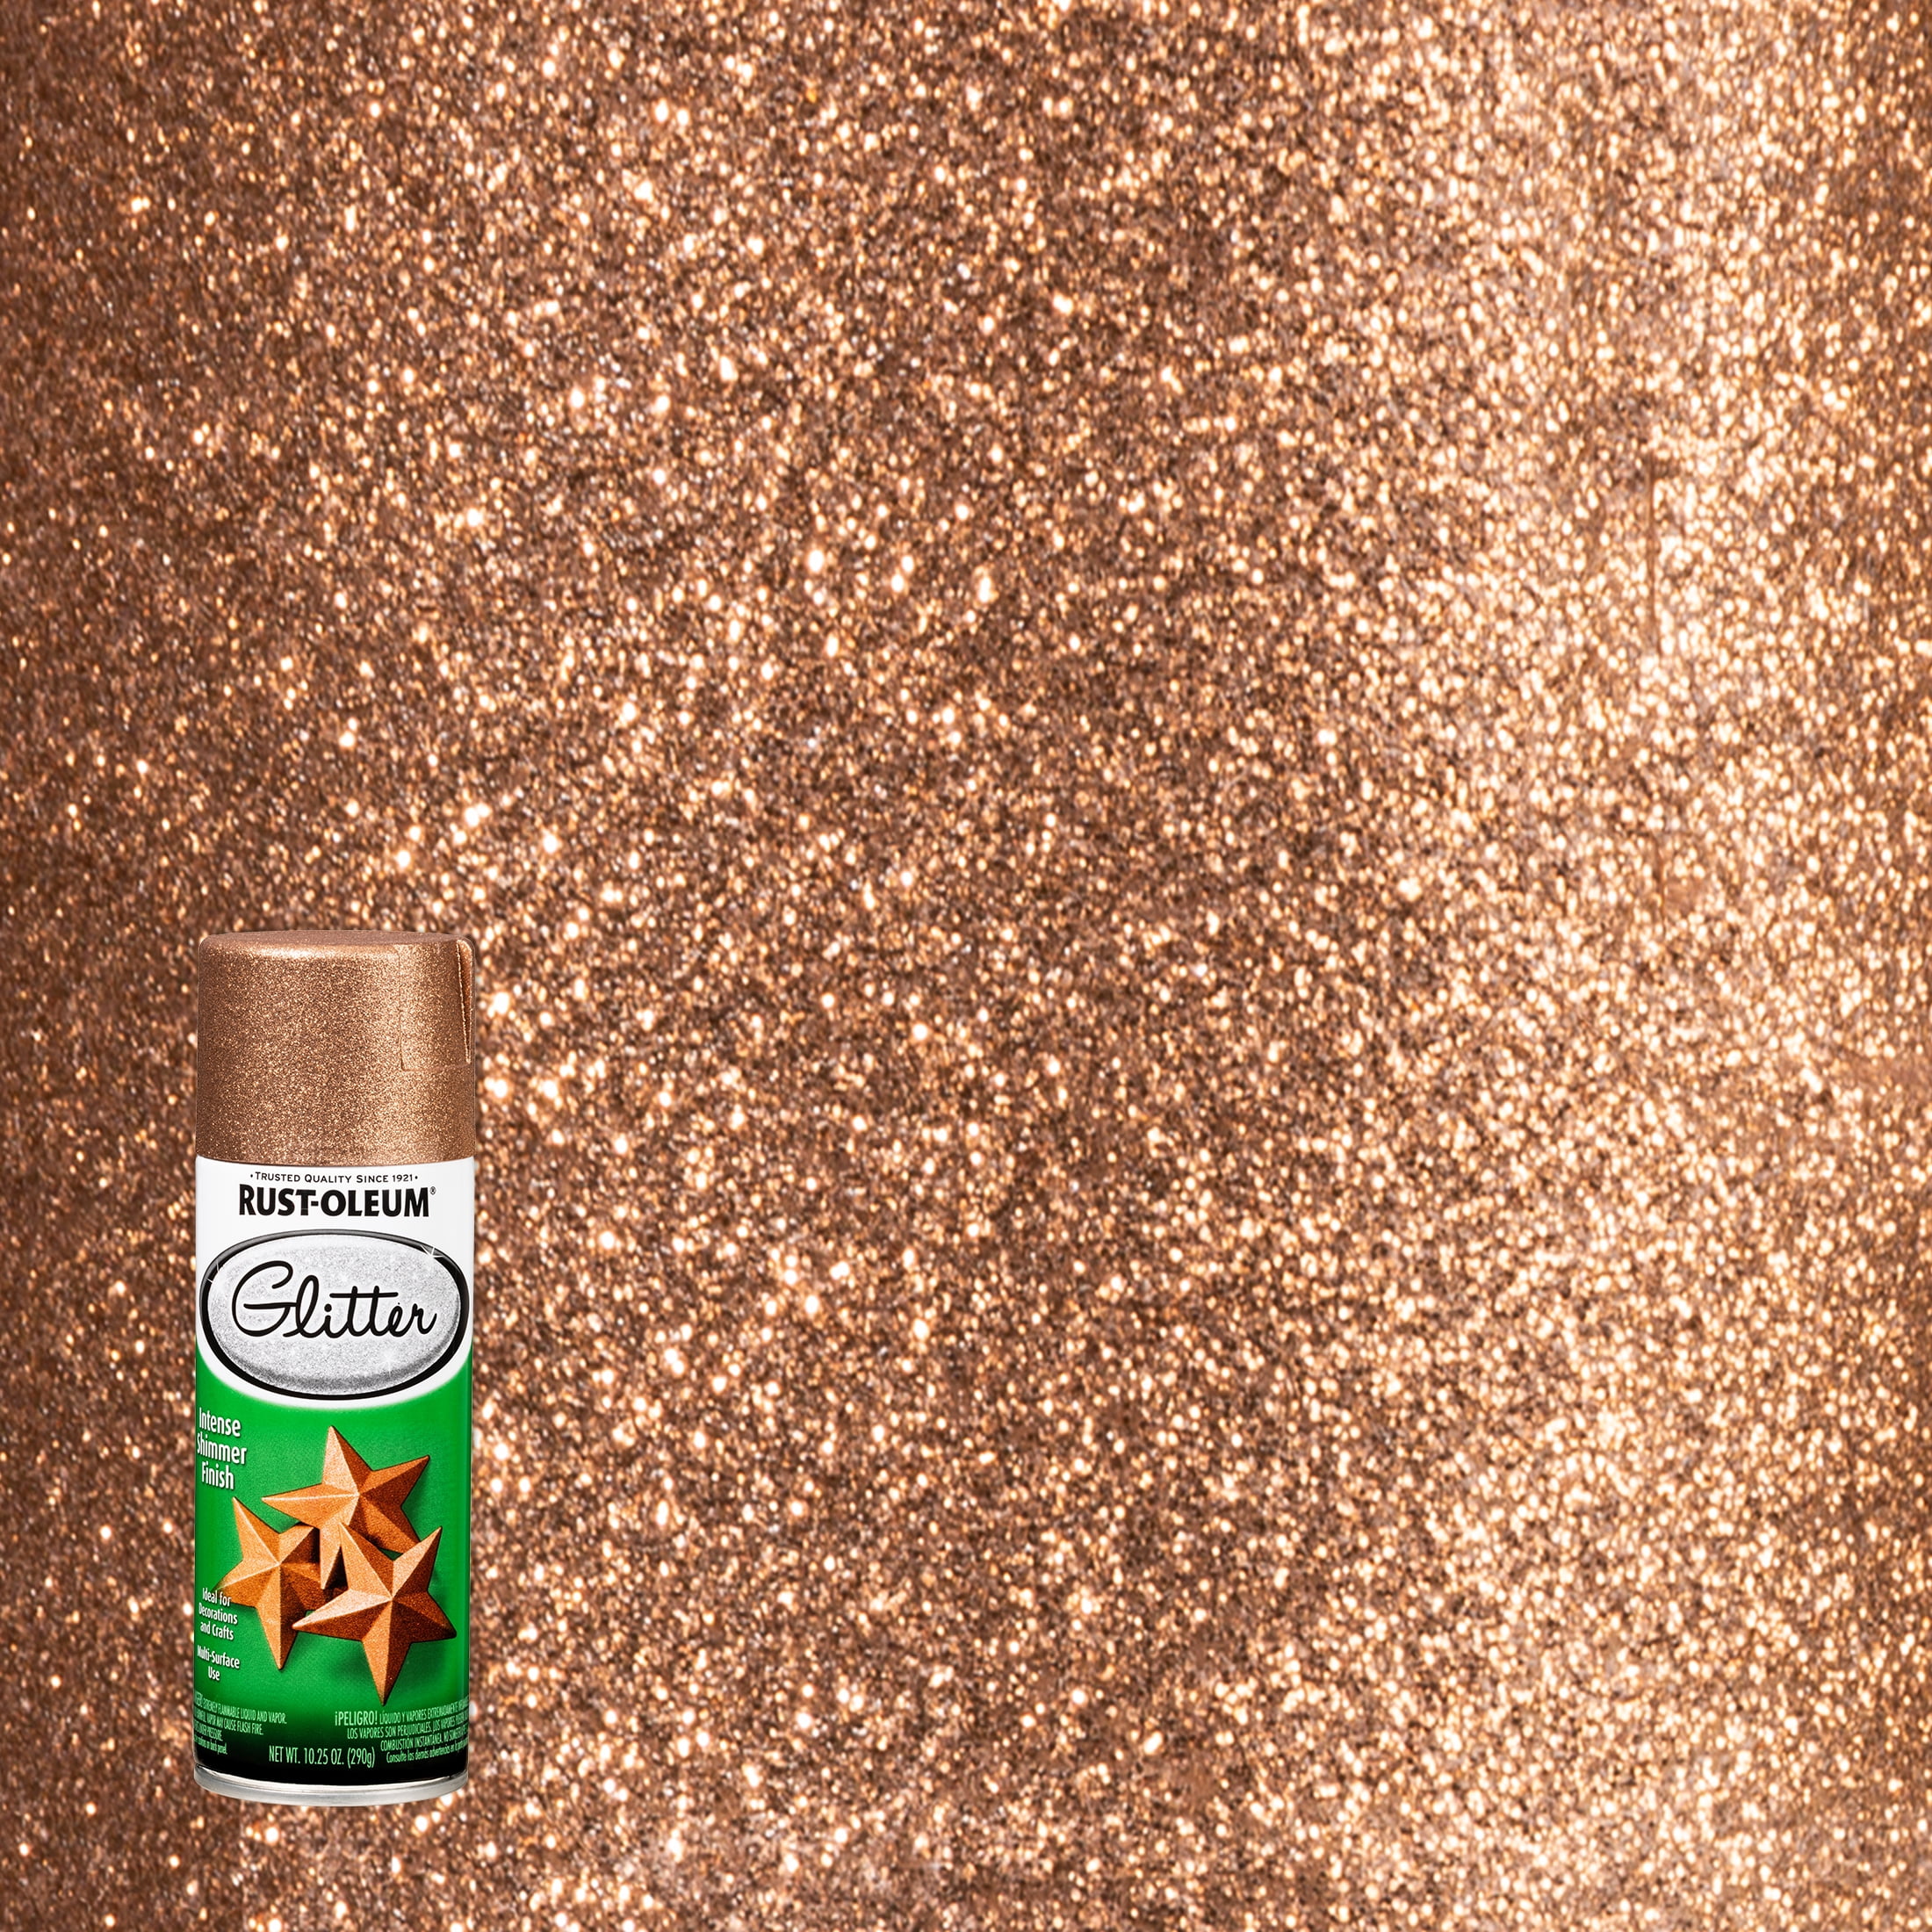 10.25 oz. Gold Glitter Spray Paint (6-pack)